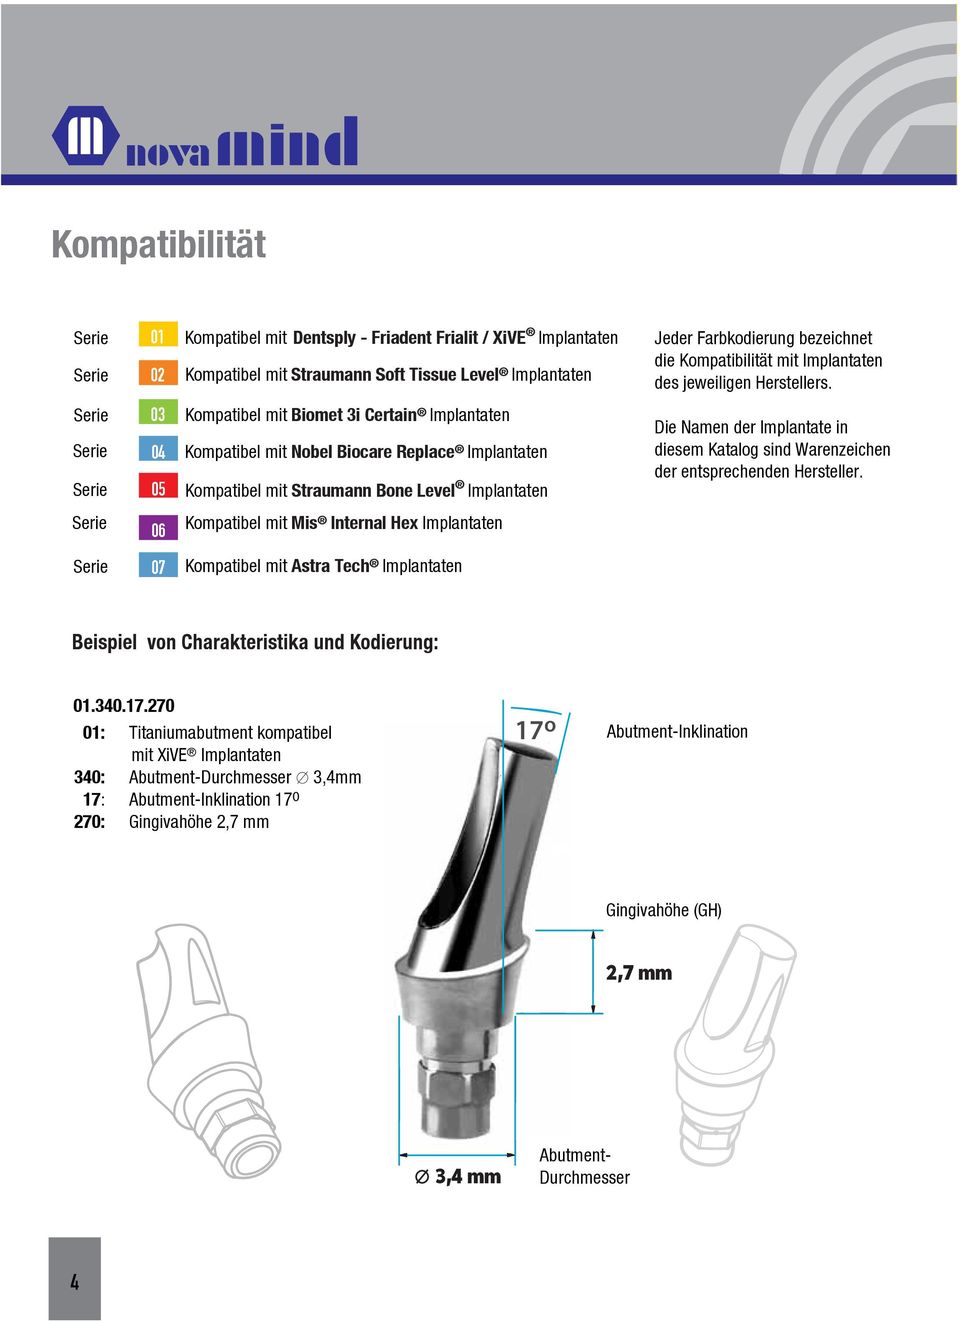 Serie Serie Serie 03 04 05 Kompatibel mit Biomet 3i Certain Implantaten Kompatibel mit Nobel Biocare Replace Implantaten Kompatibel mit Straumann Bone Level Implantaten Die Namen der Implantate in